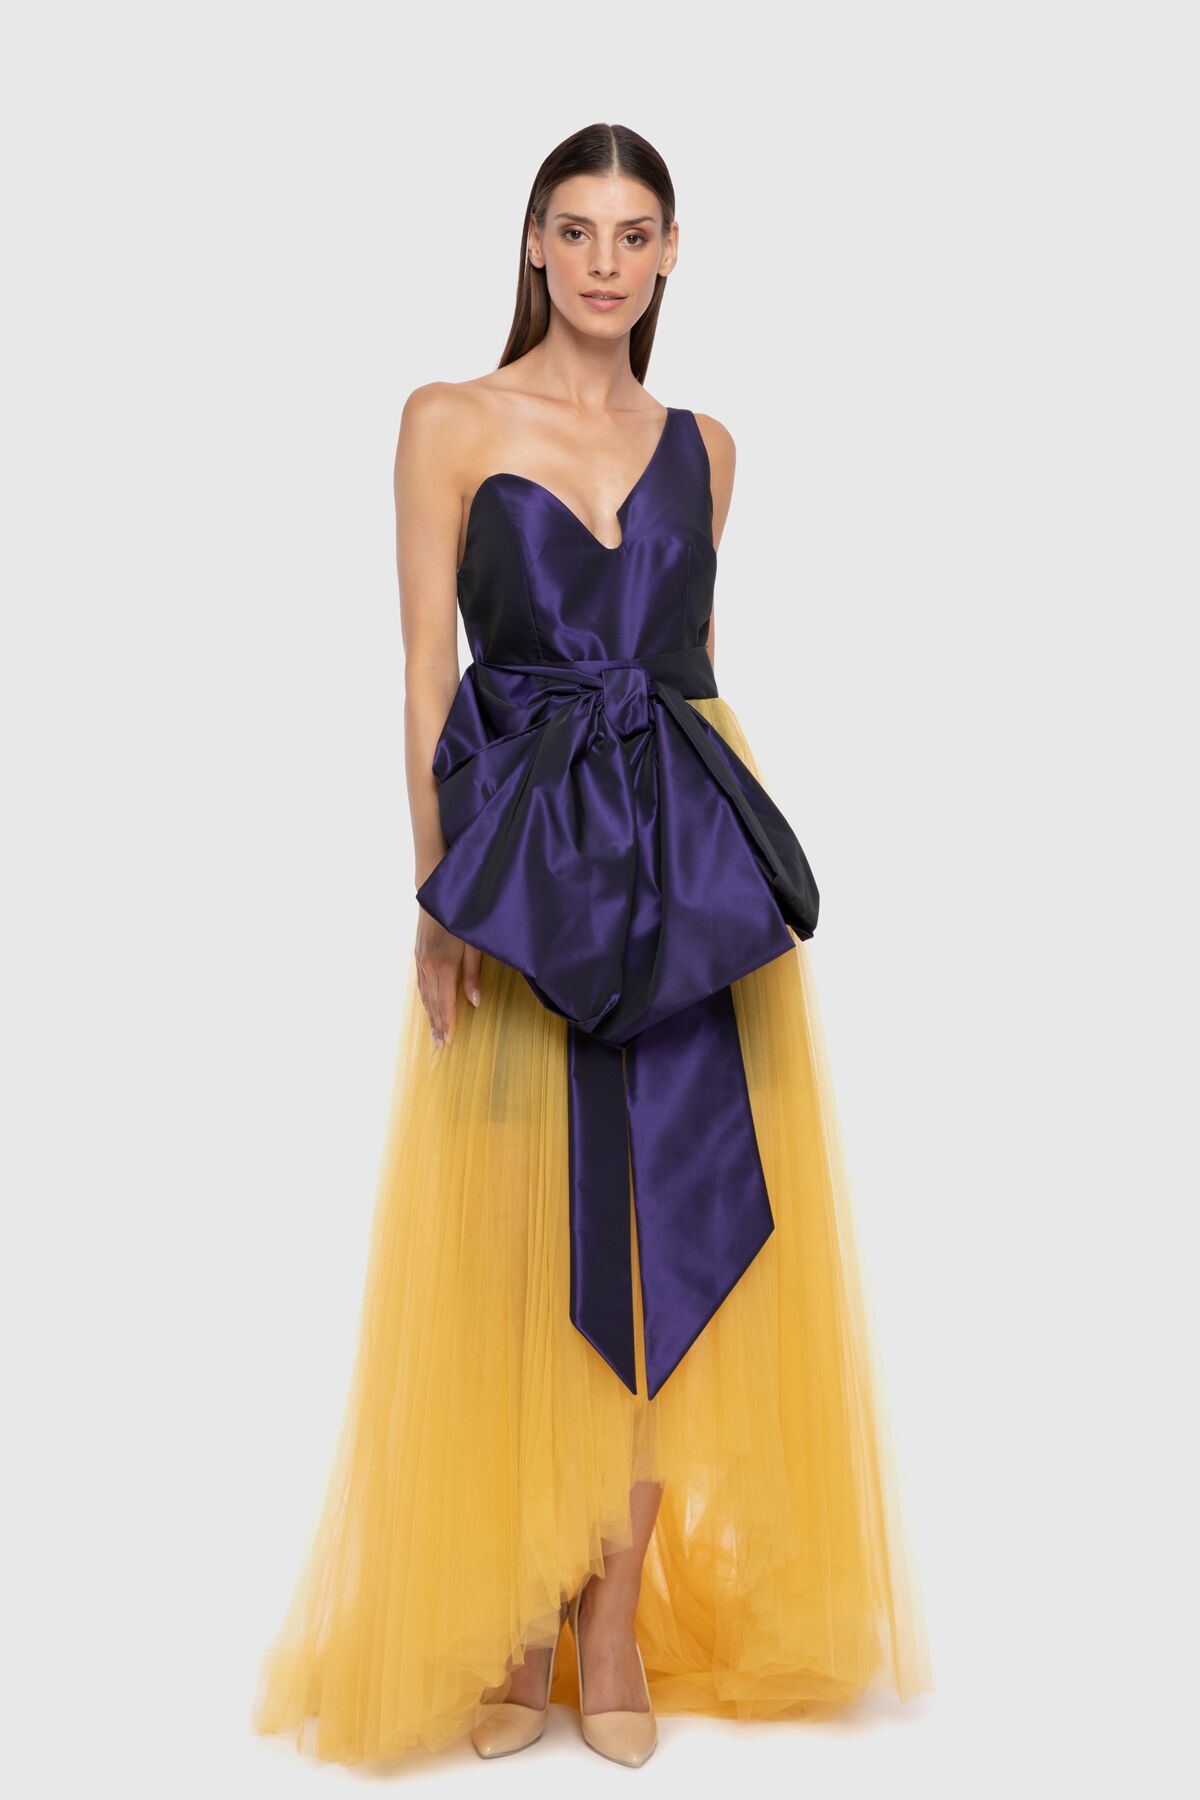  GIZIA - With Six Tulle Tops Taffeta Fabric Long Purple Evening Dress